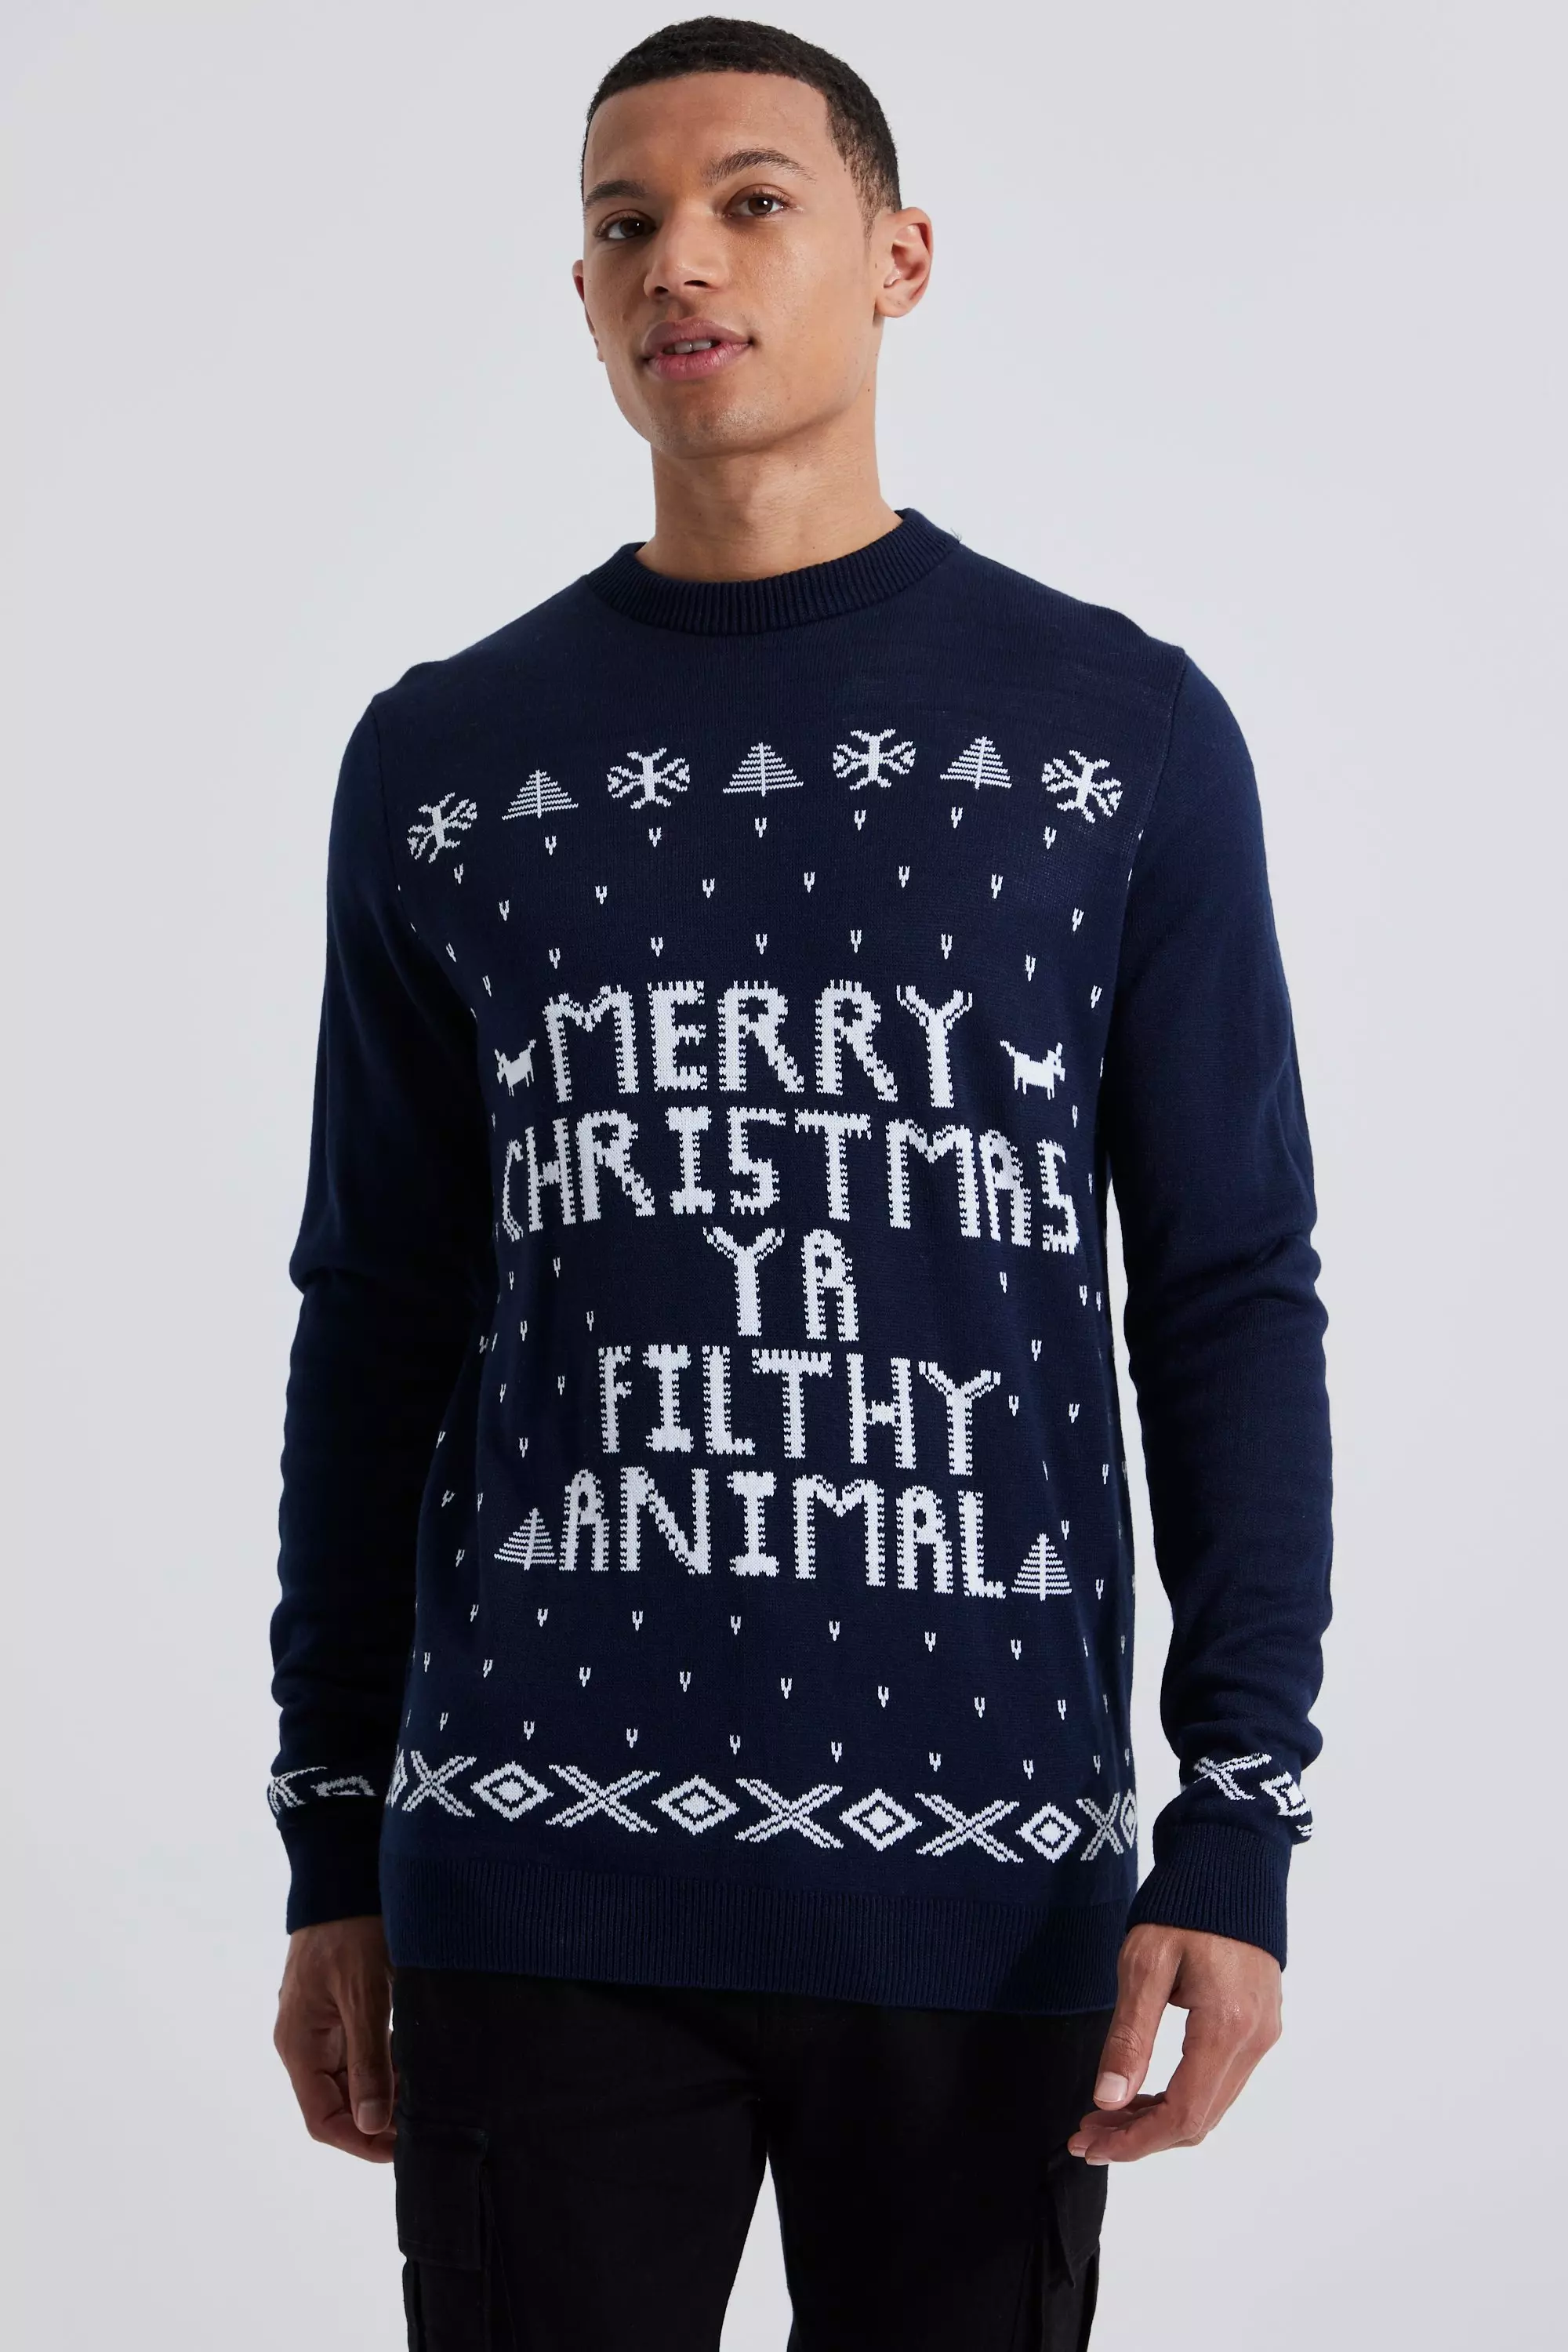 Navy Tall Ya Filthy Animal Christmas Sweater